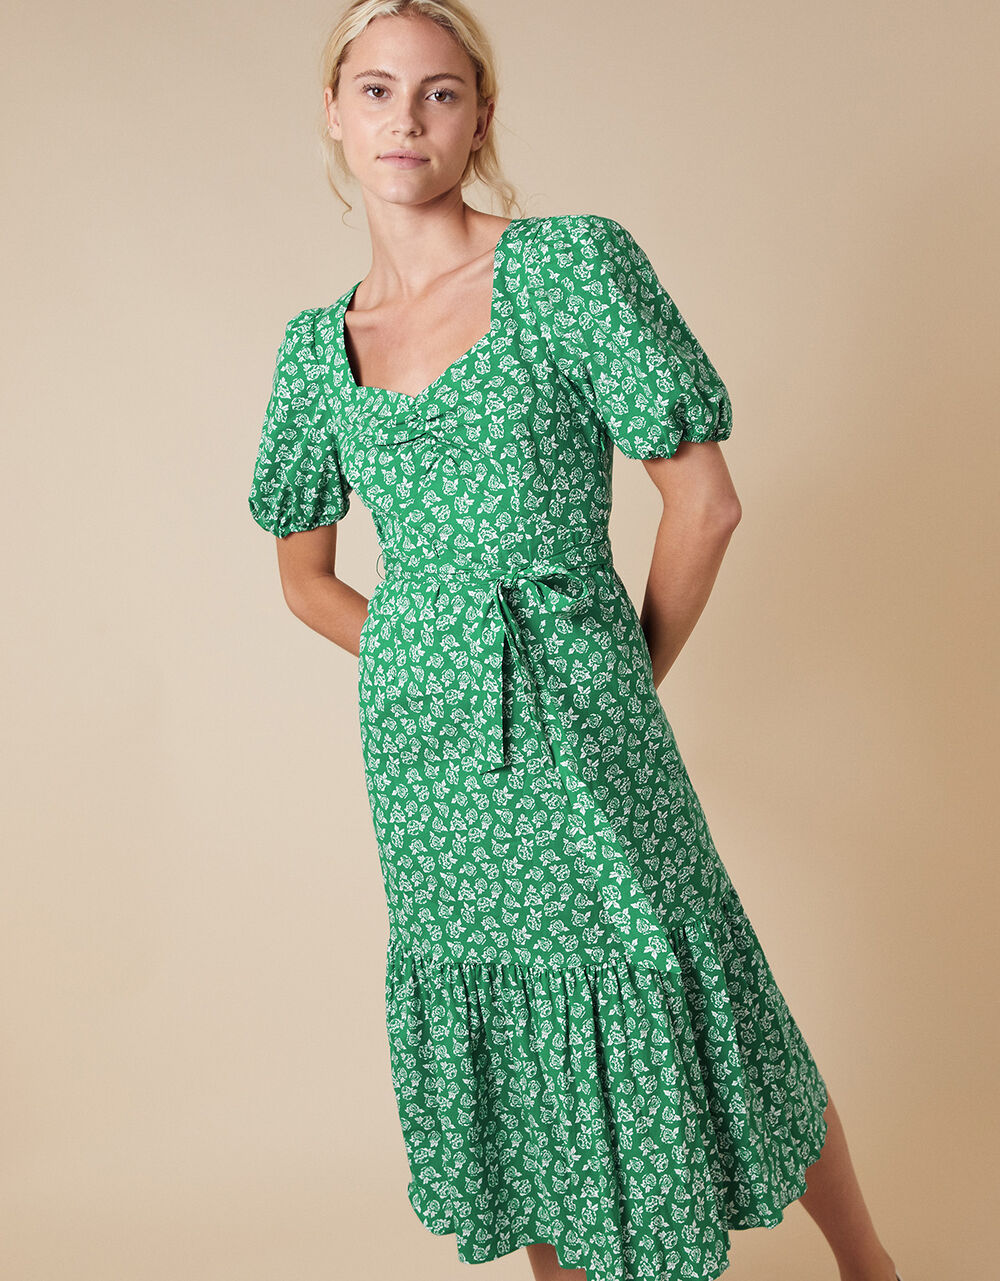 Roxie Rose Print Dress in Organic Cotton Green